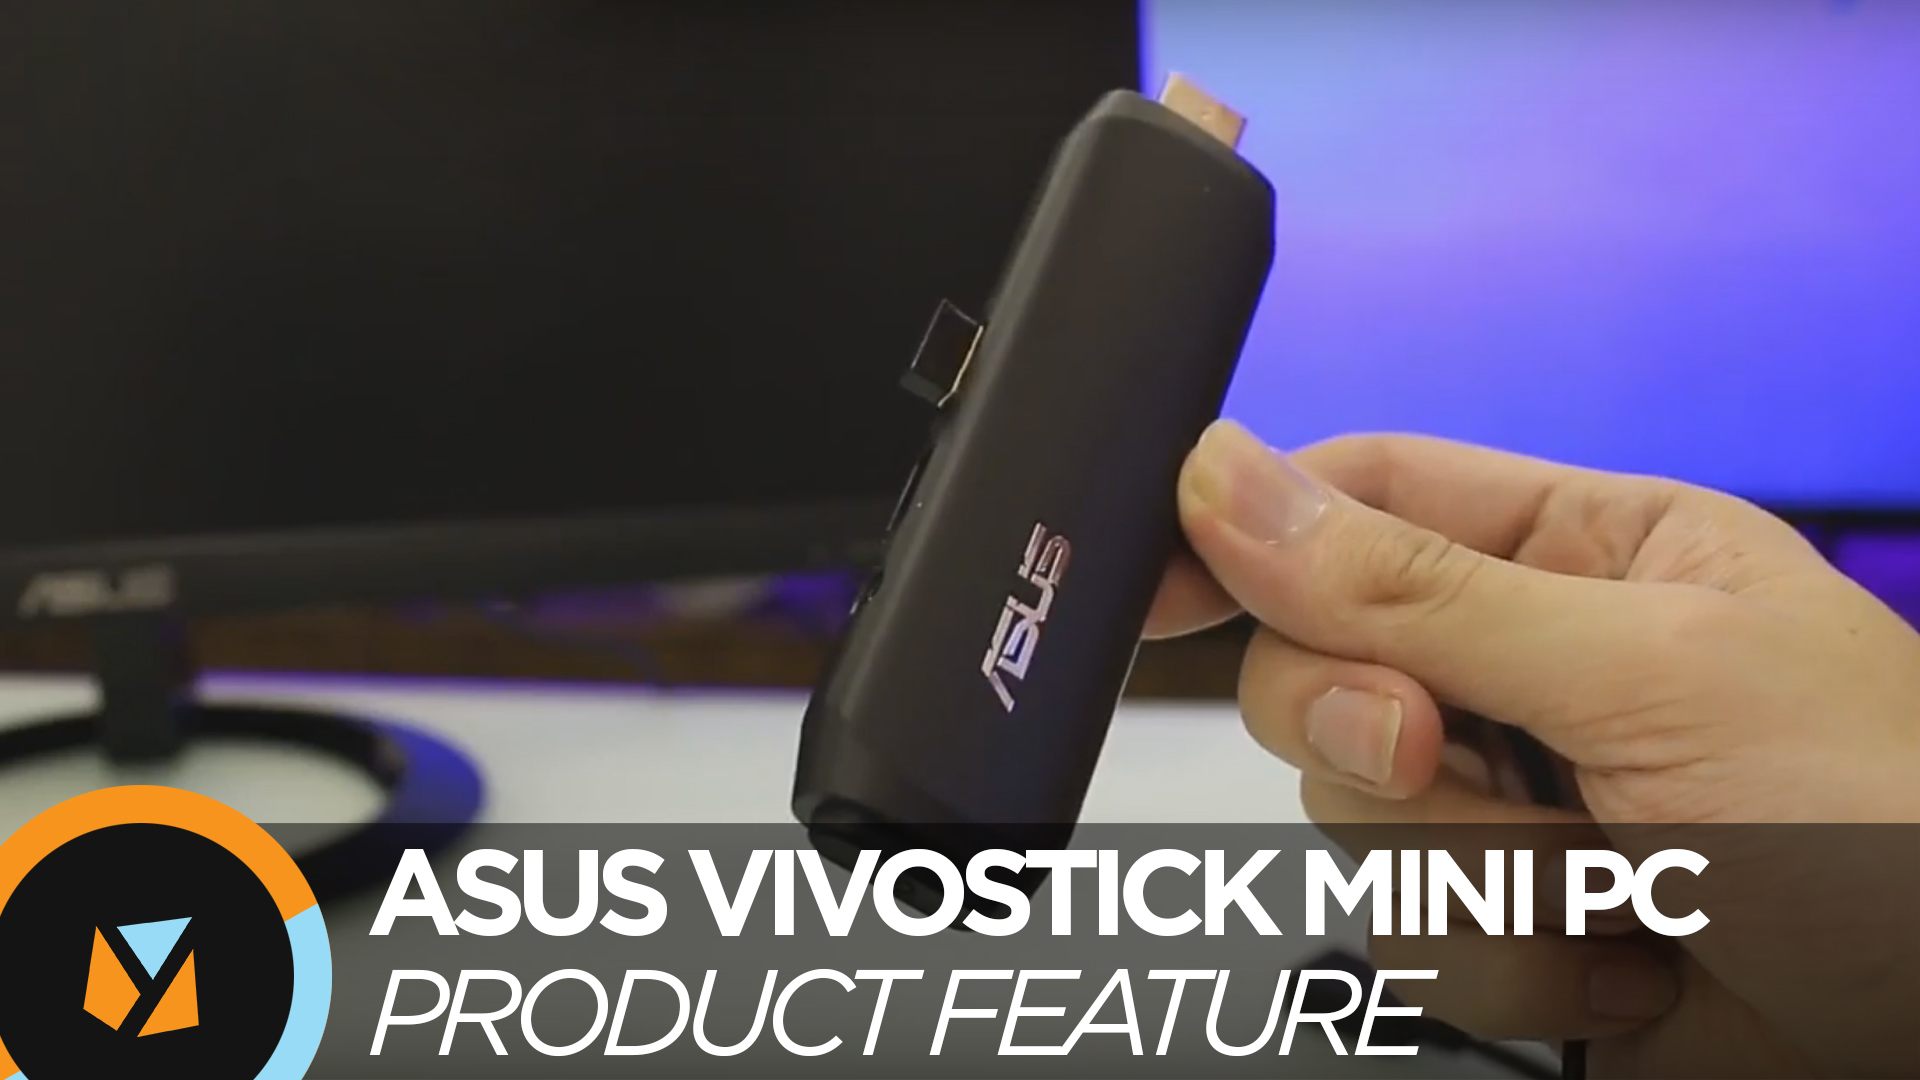 Asus Vivostick Mini PC